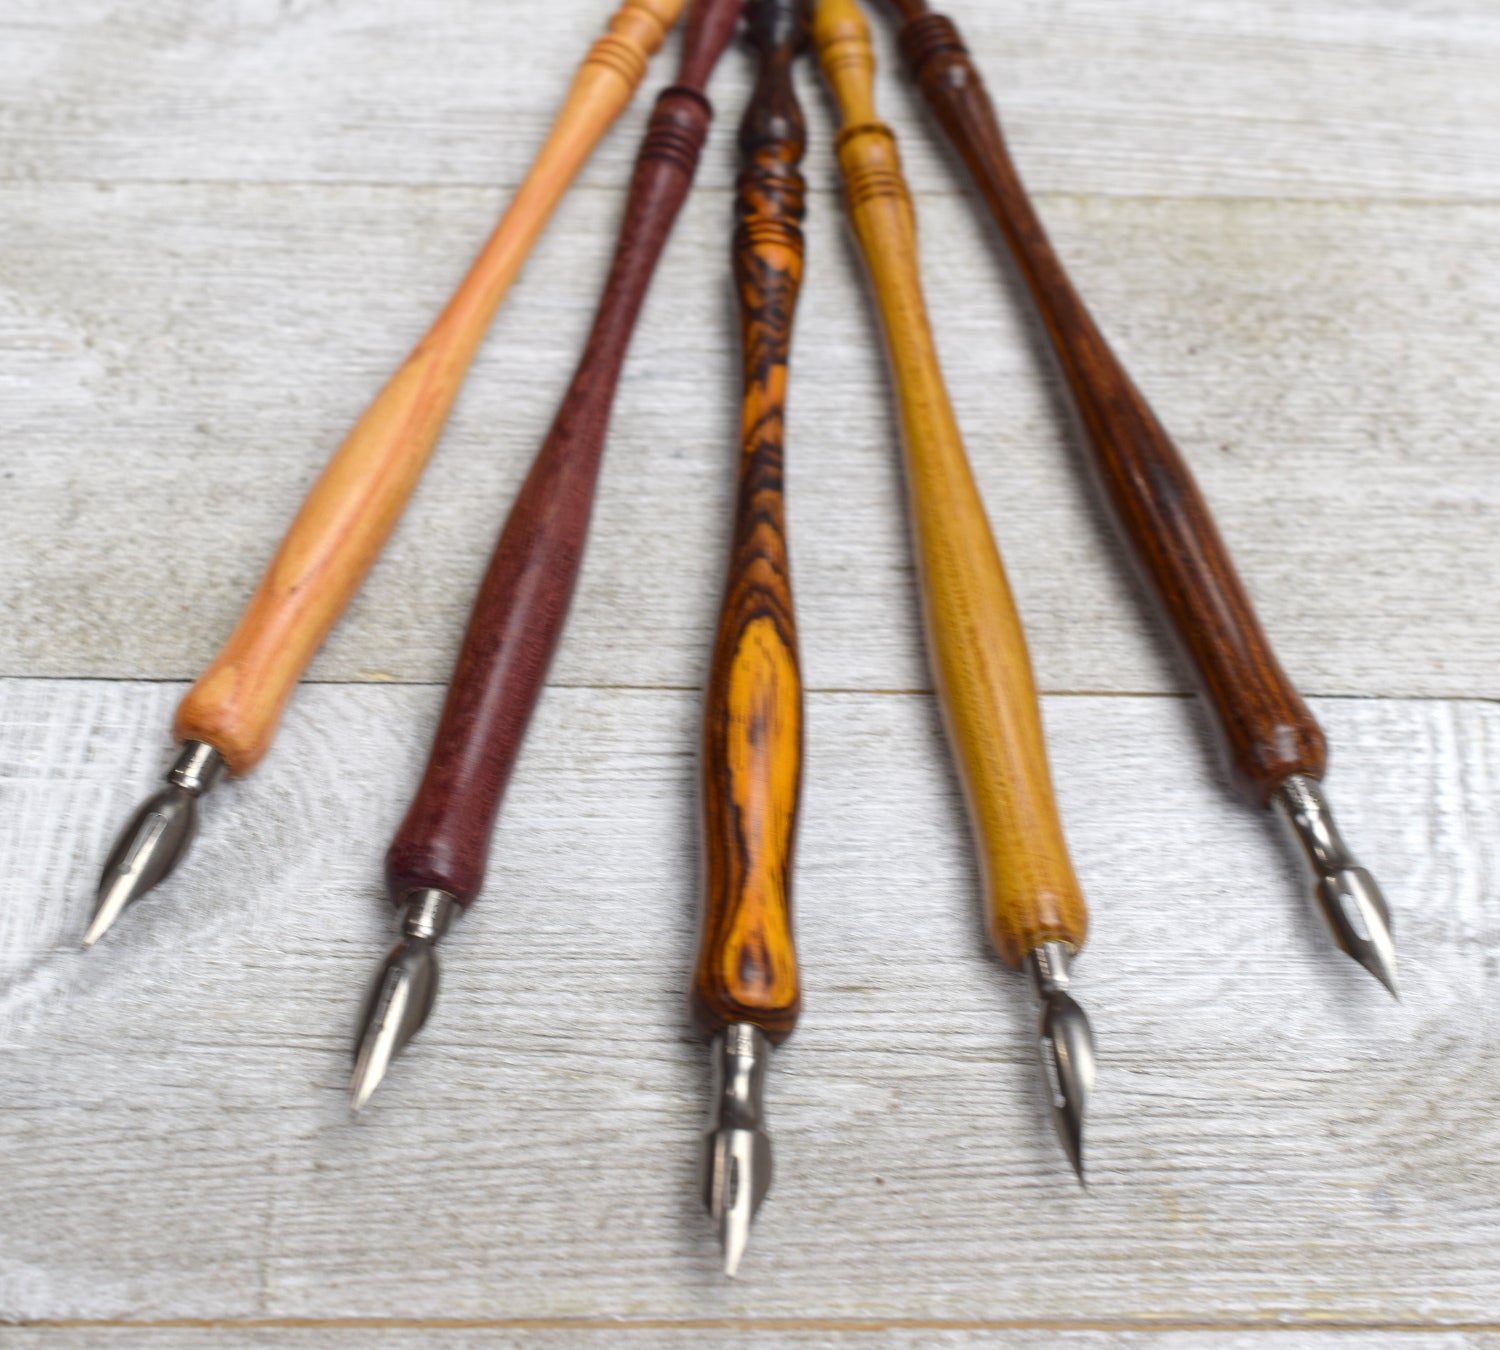 Plotube Wooden Pen Calligraphy Set - Dip Wood Pen Gift Writing Case with Golden Nib - Black Ink 